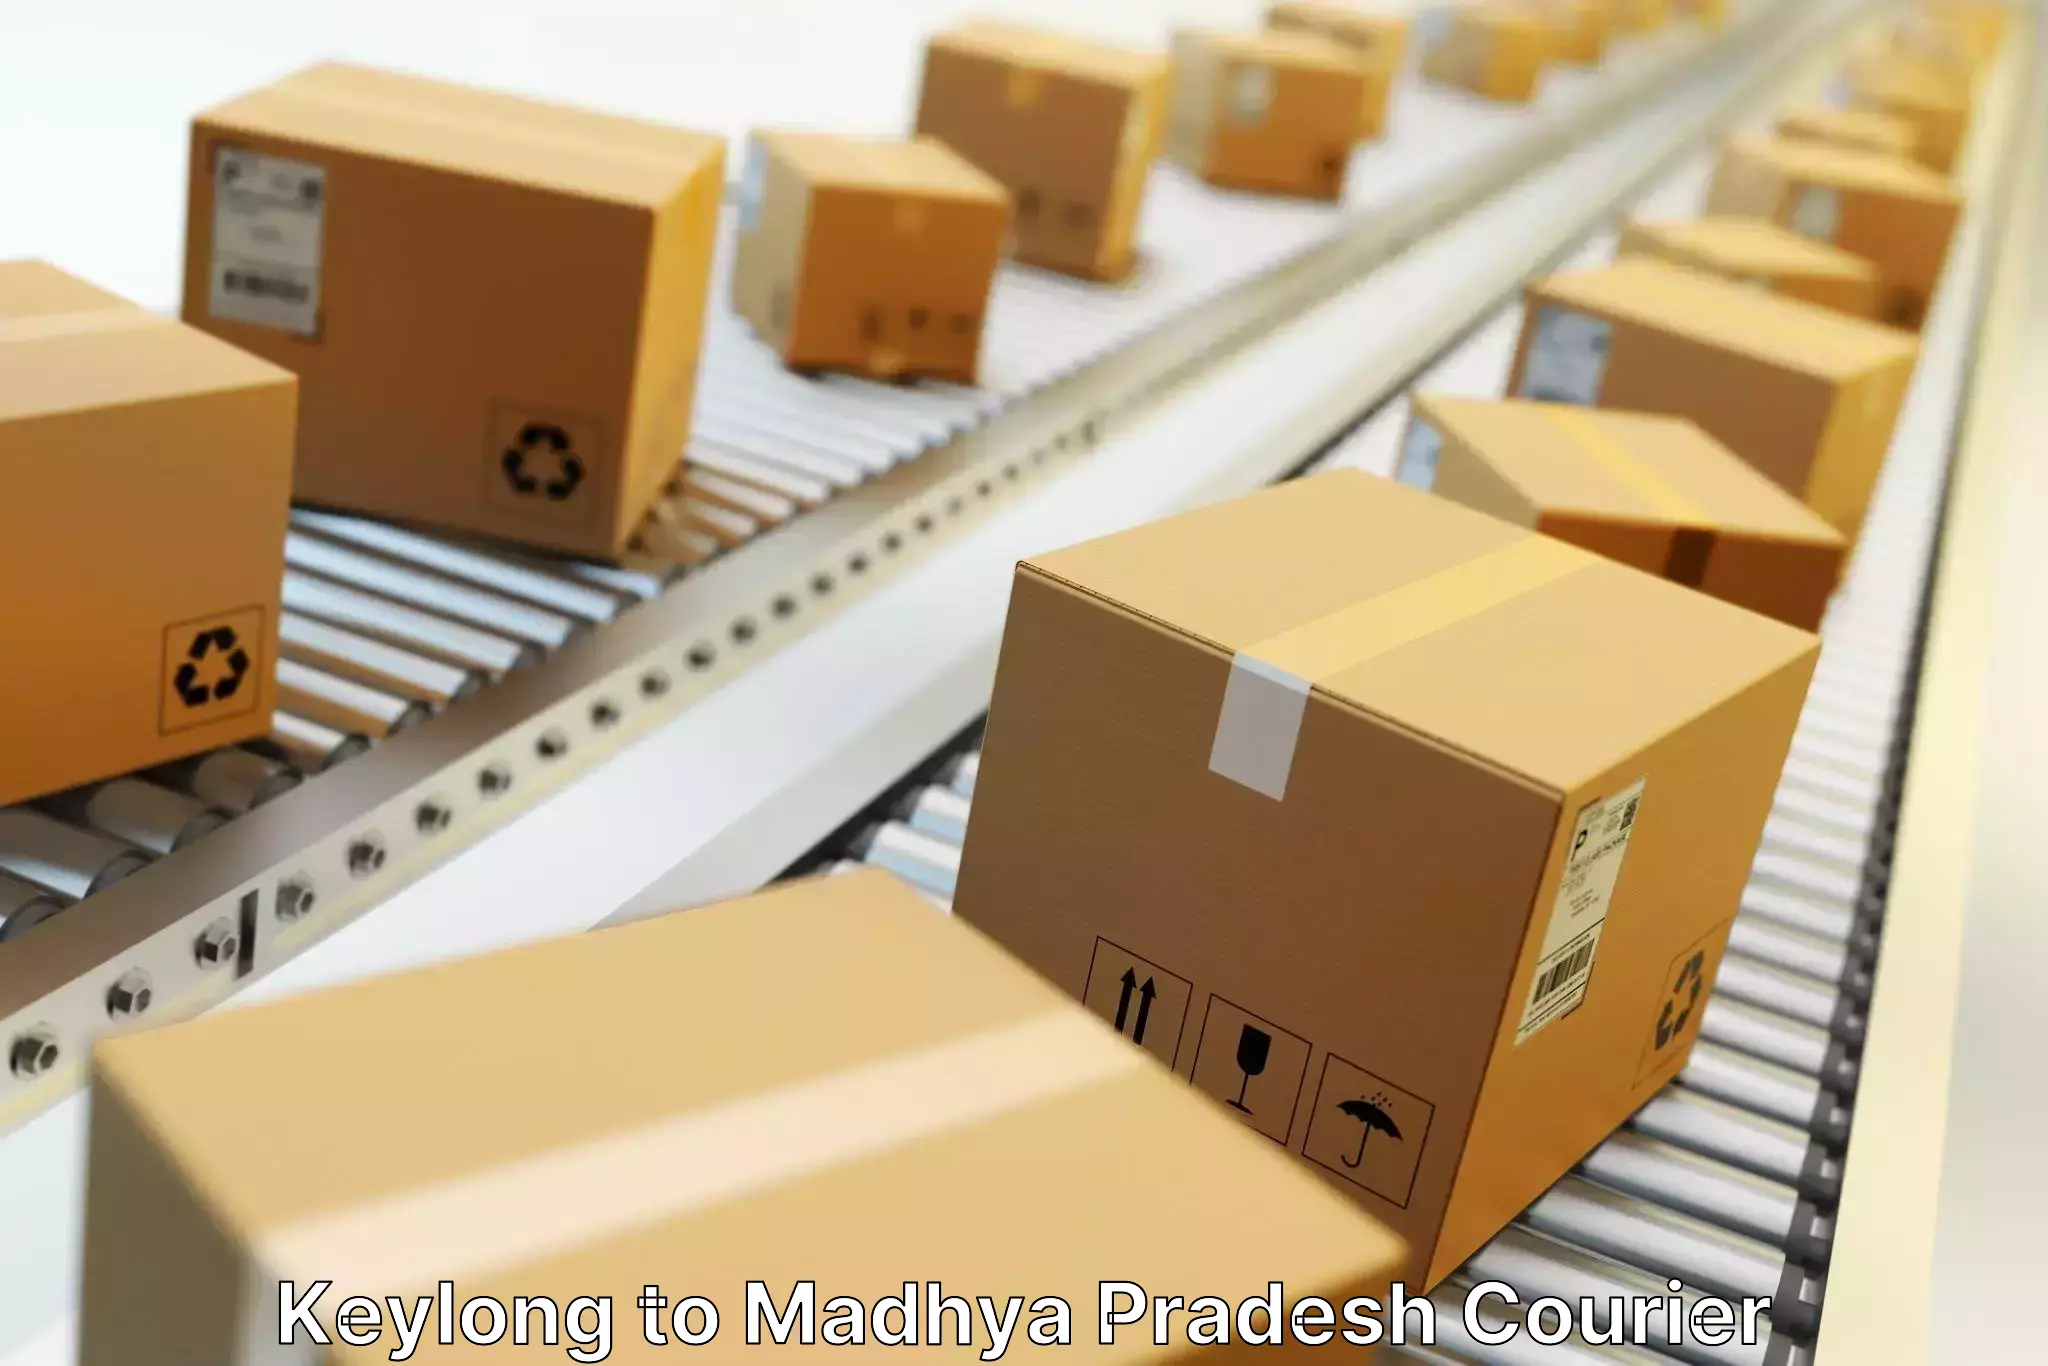 Modern courier technology Keylong to Madhya Pradesh